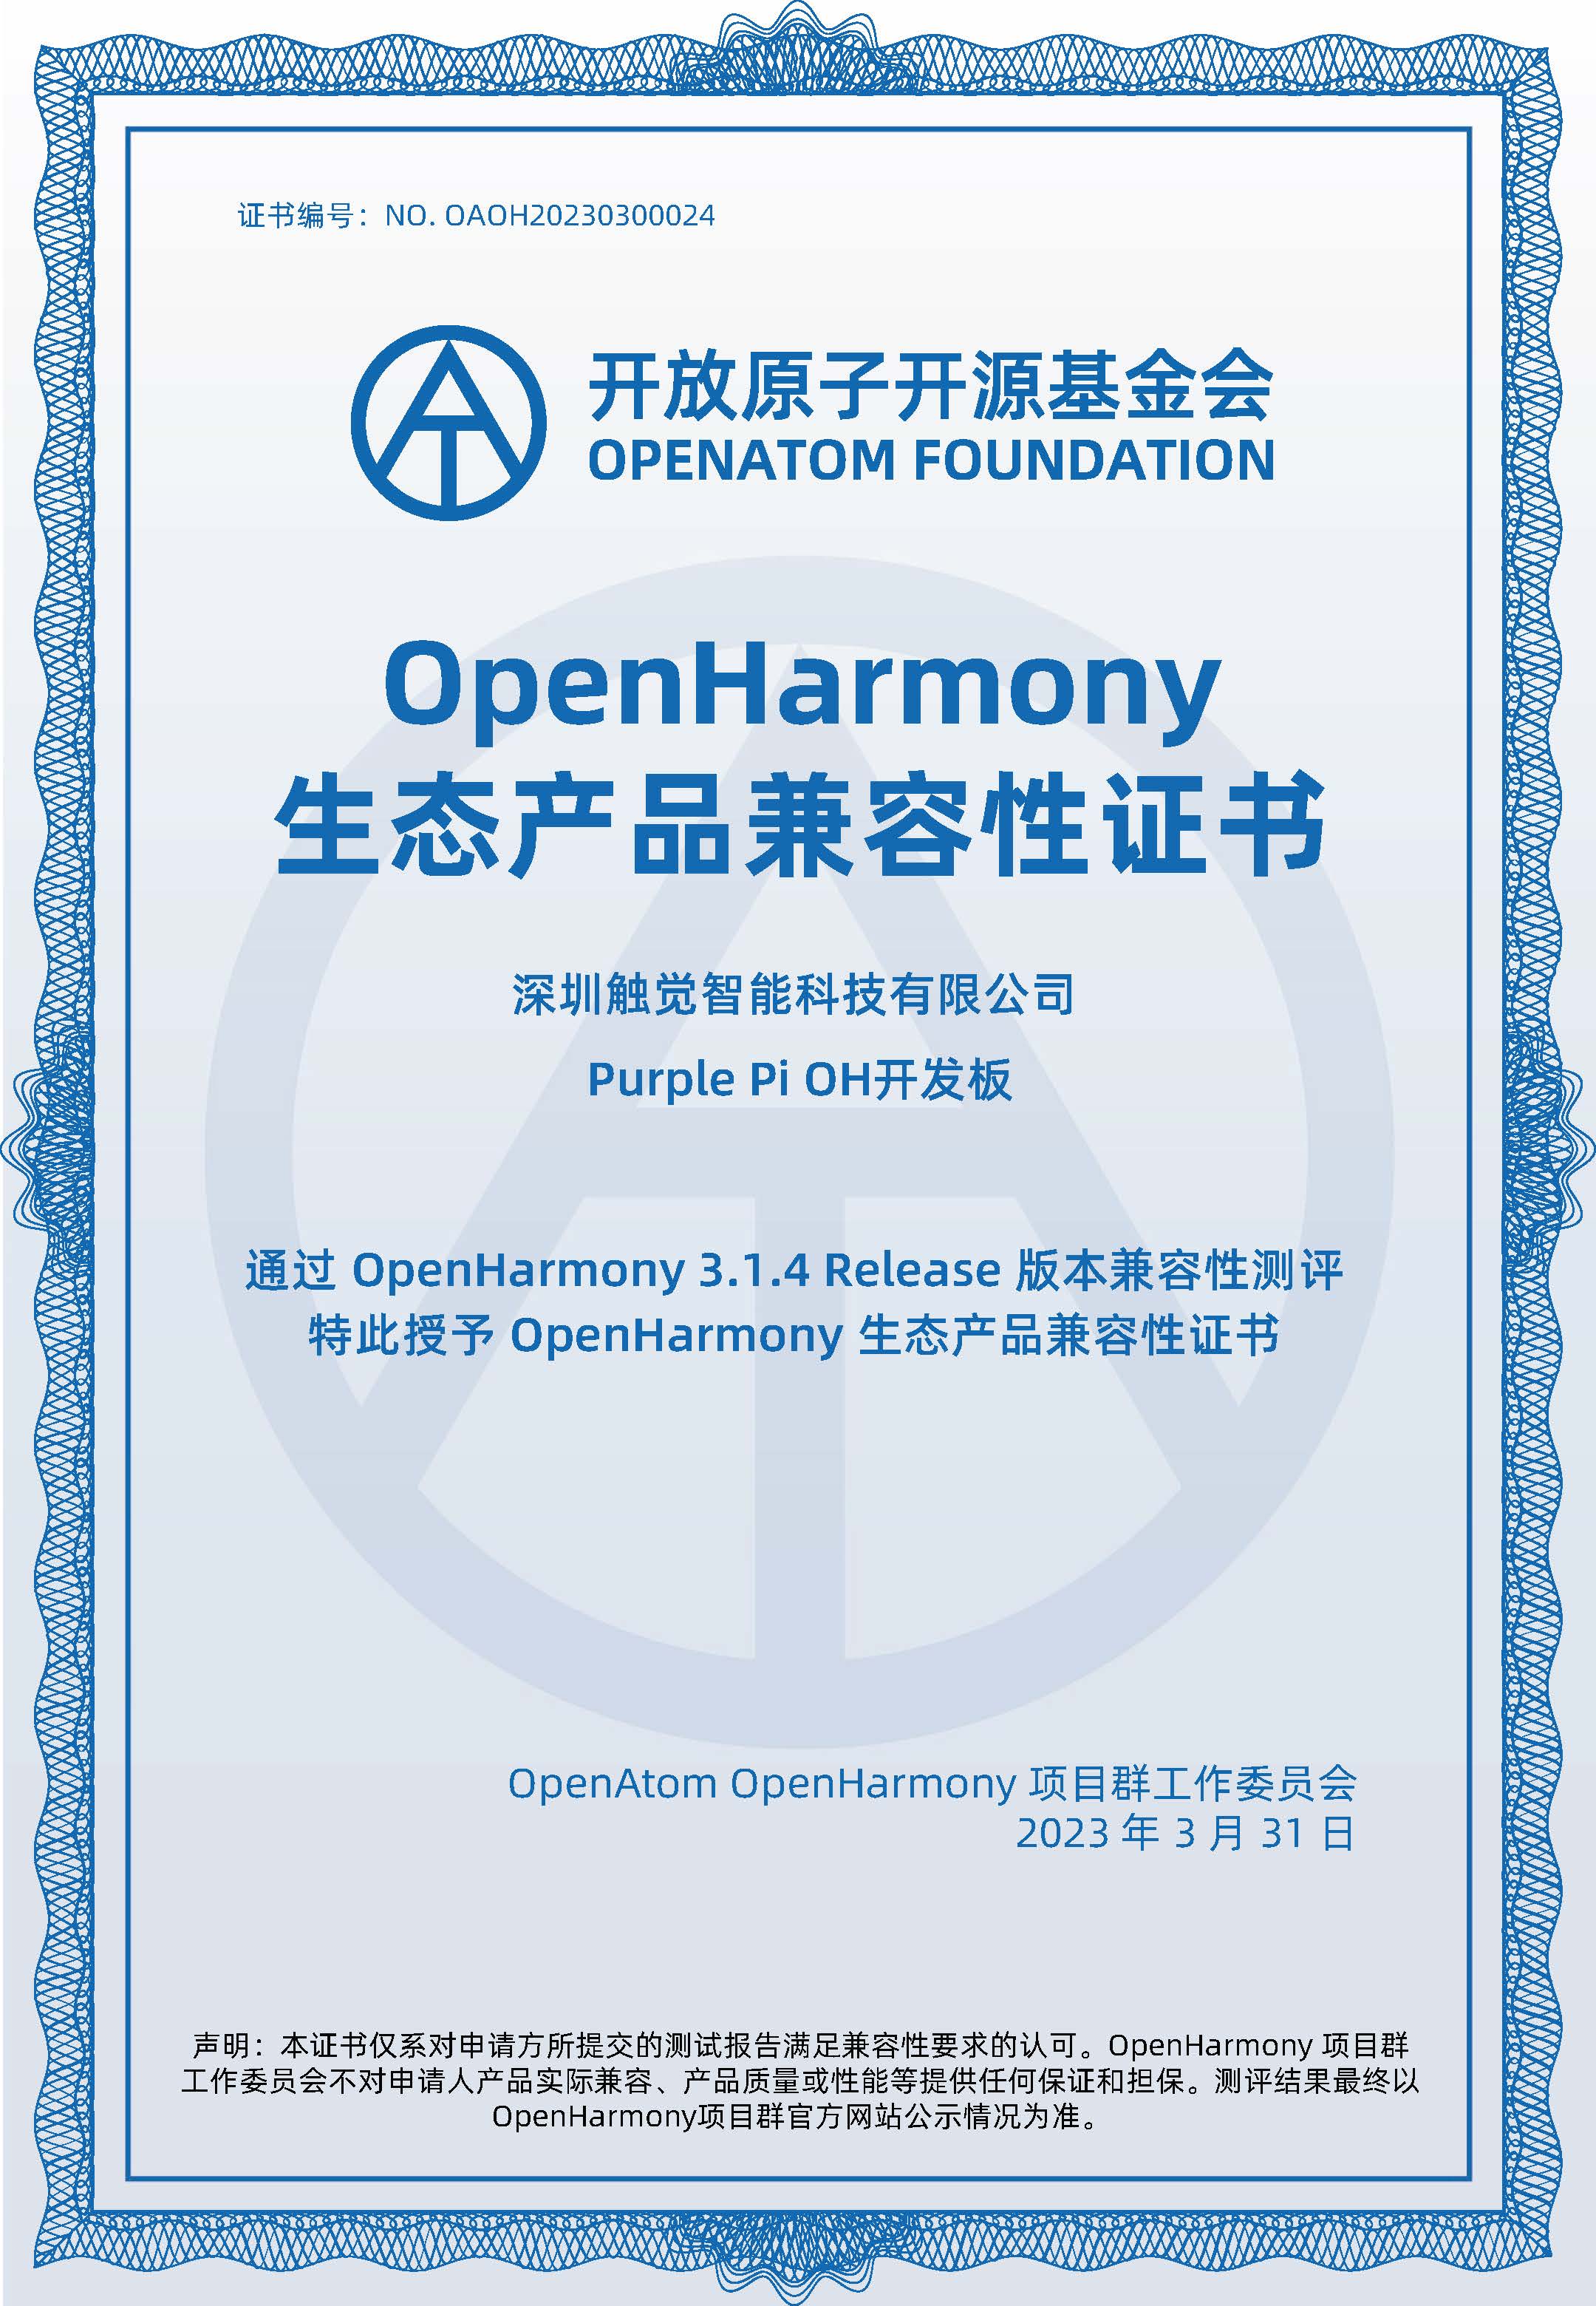 Purple Pi OH开源主板通过 OpenHarmony 兼容性测评